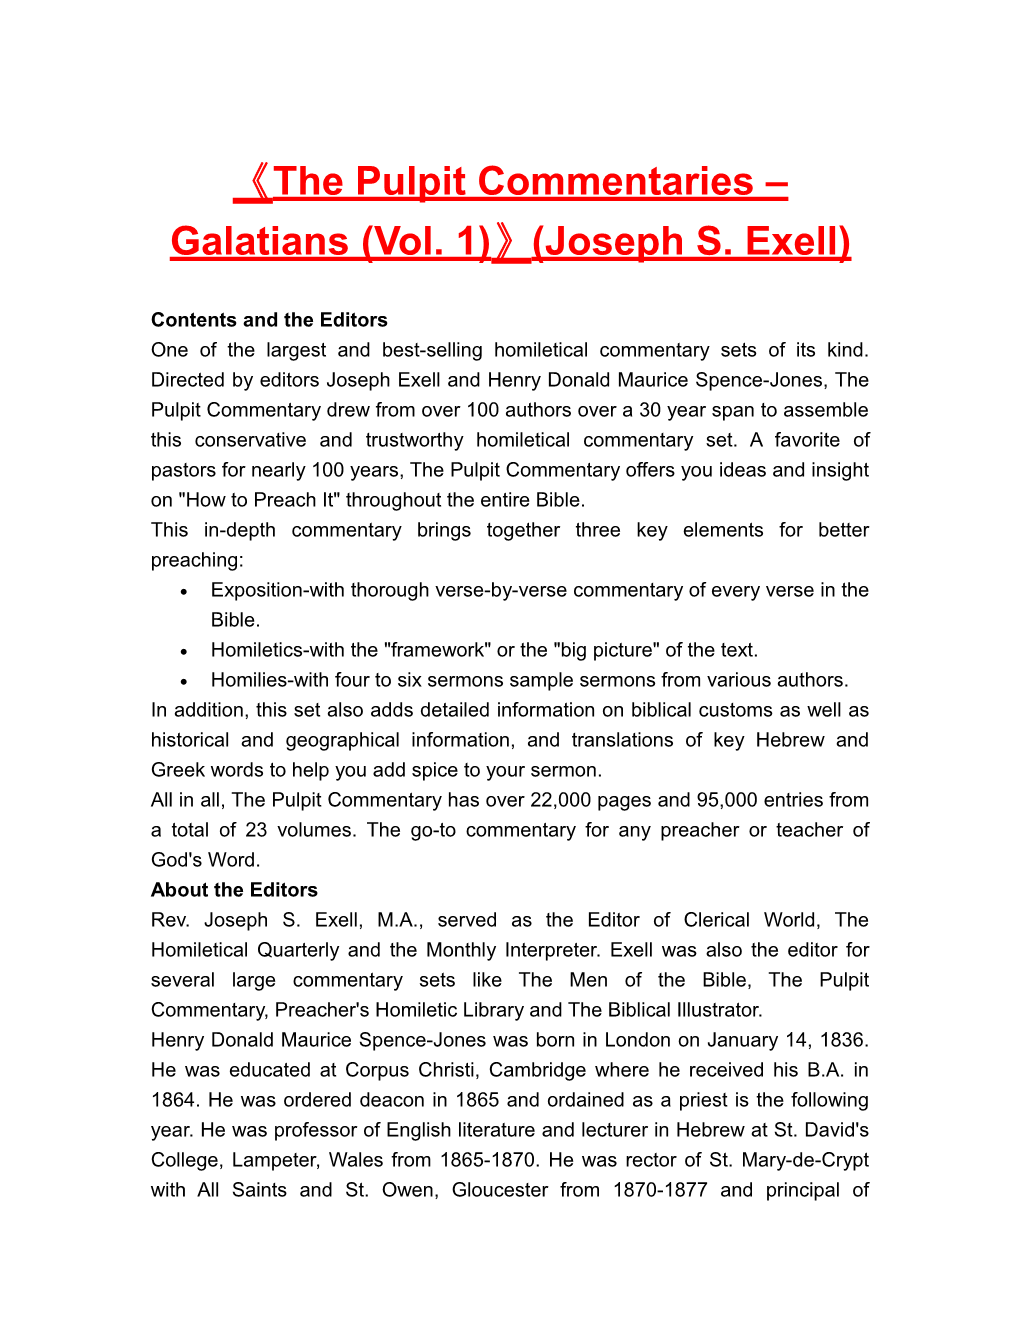 The Pulpit Commentaries Galatians (Vol. 1) (Joseph S. Exell)